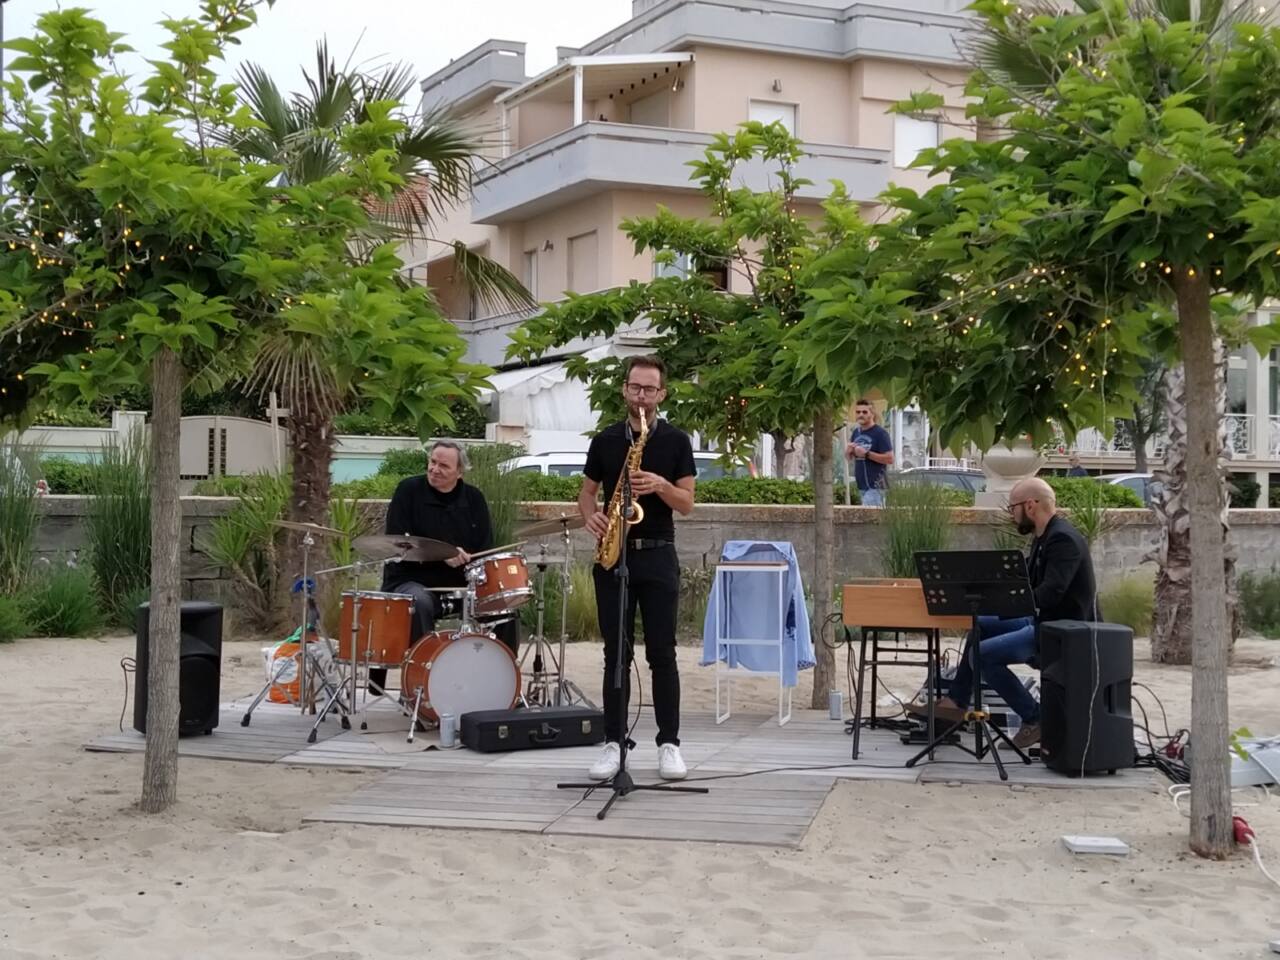 Appuntamenti jazz in spiaggia a Senigallia, concerti ai bagni 77